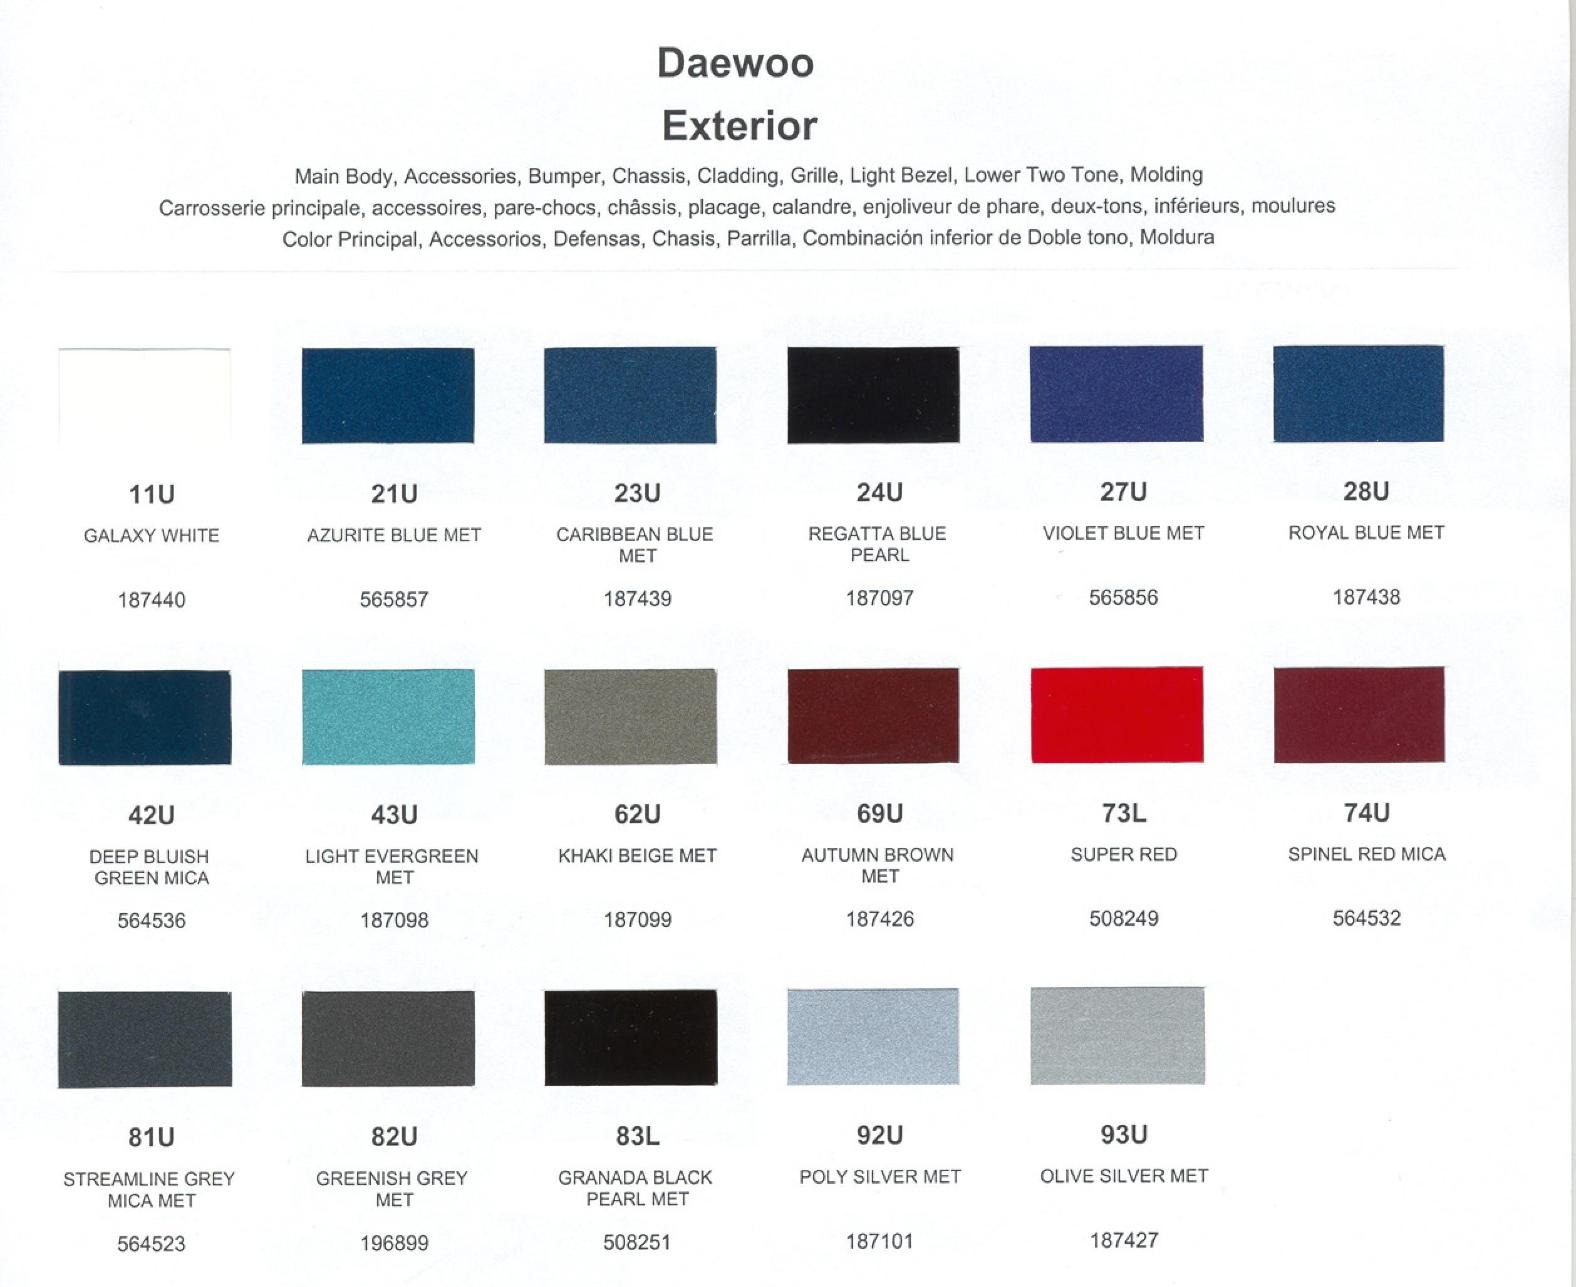 1999 Basf Color Chart for Daewoo